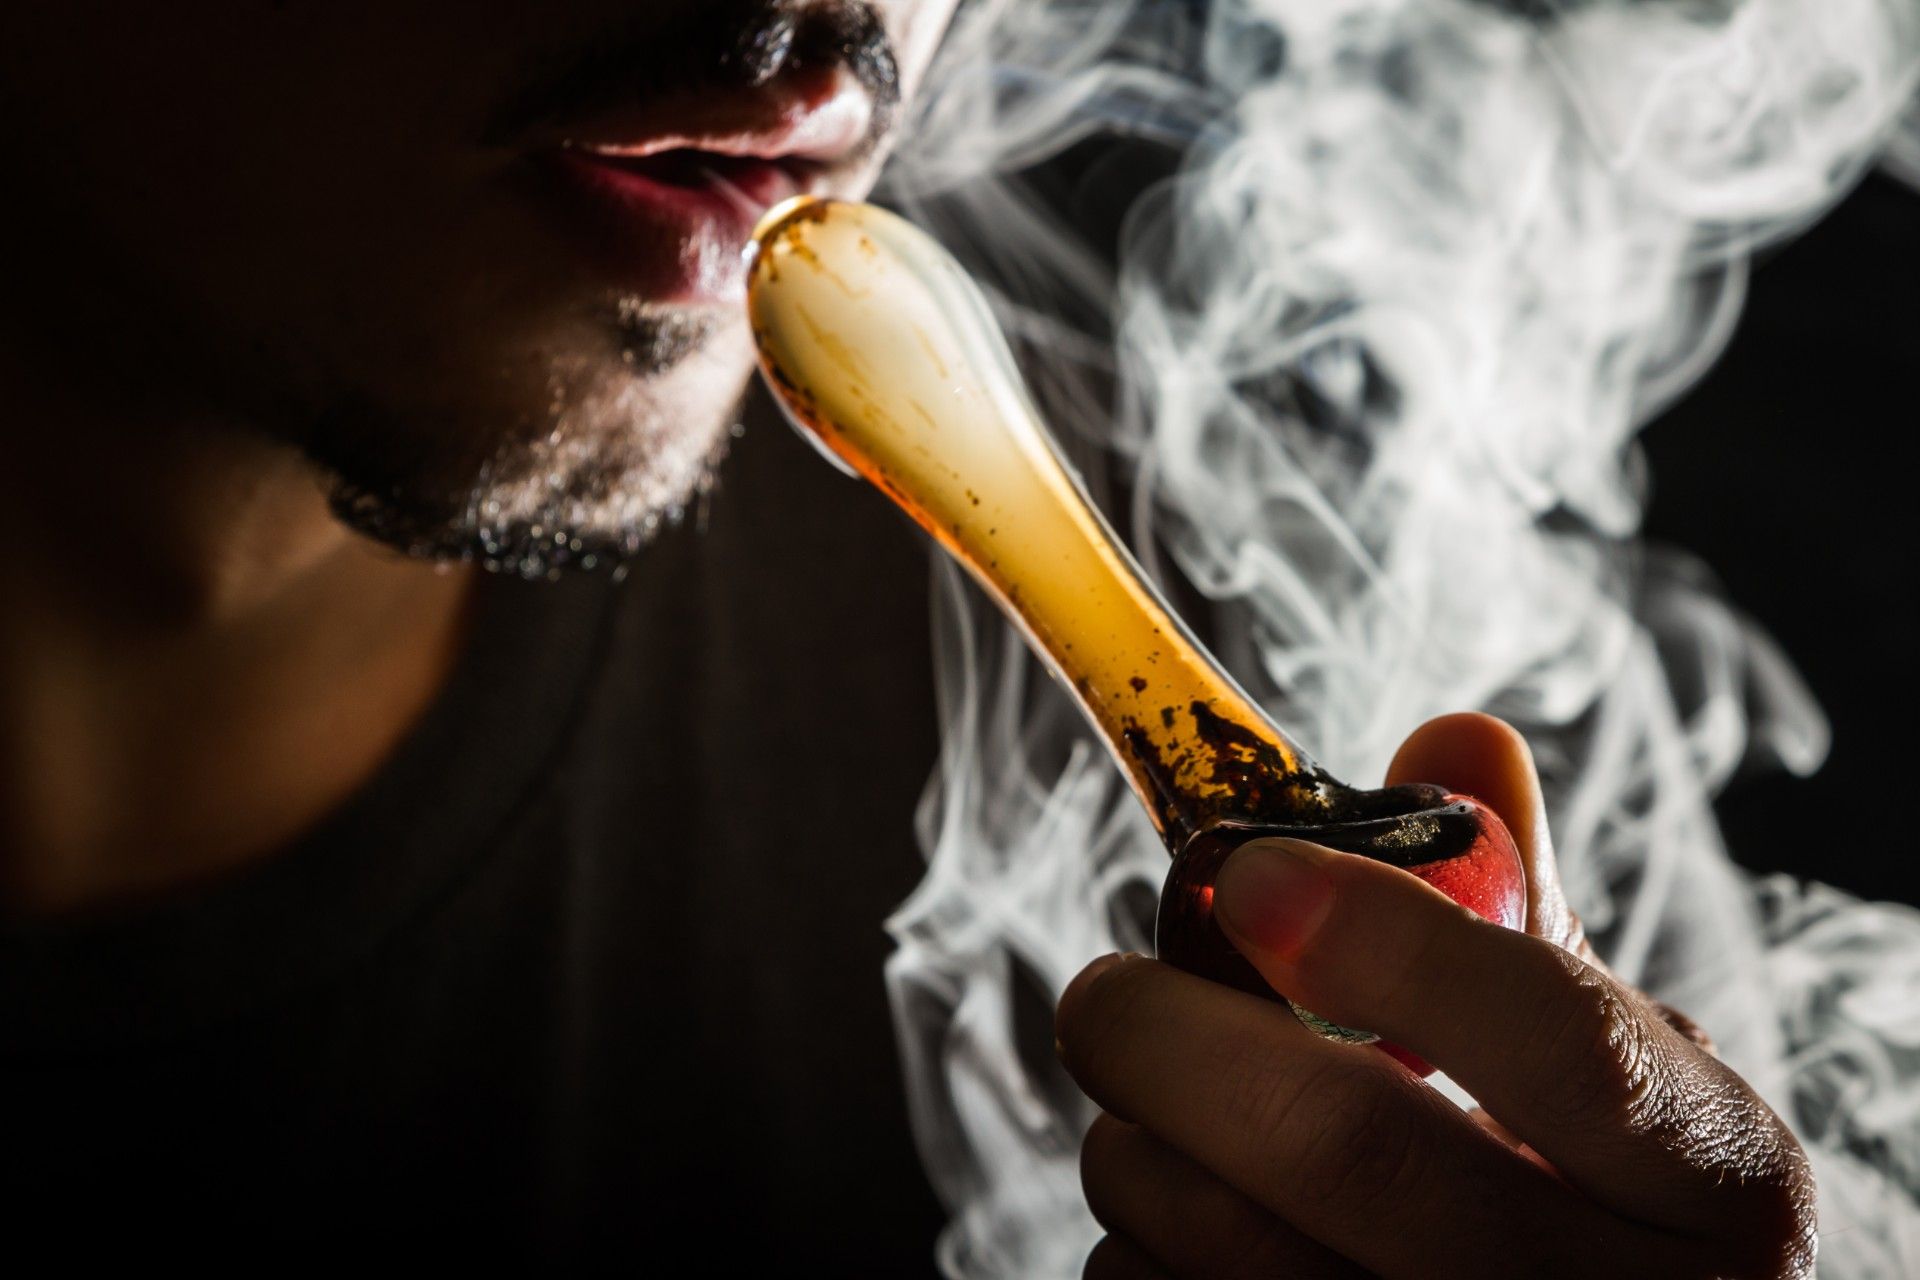 A man uses a glass pipe to smoke marijuana - legalization of marijuana